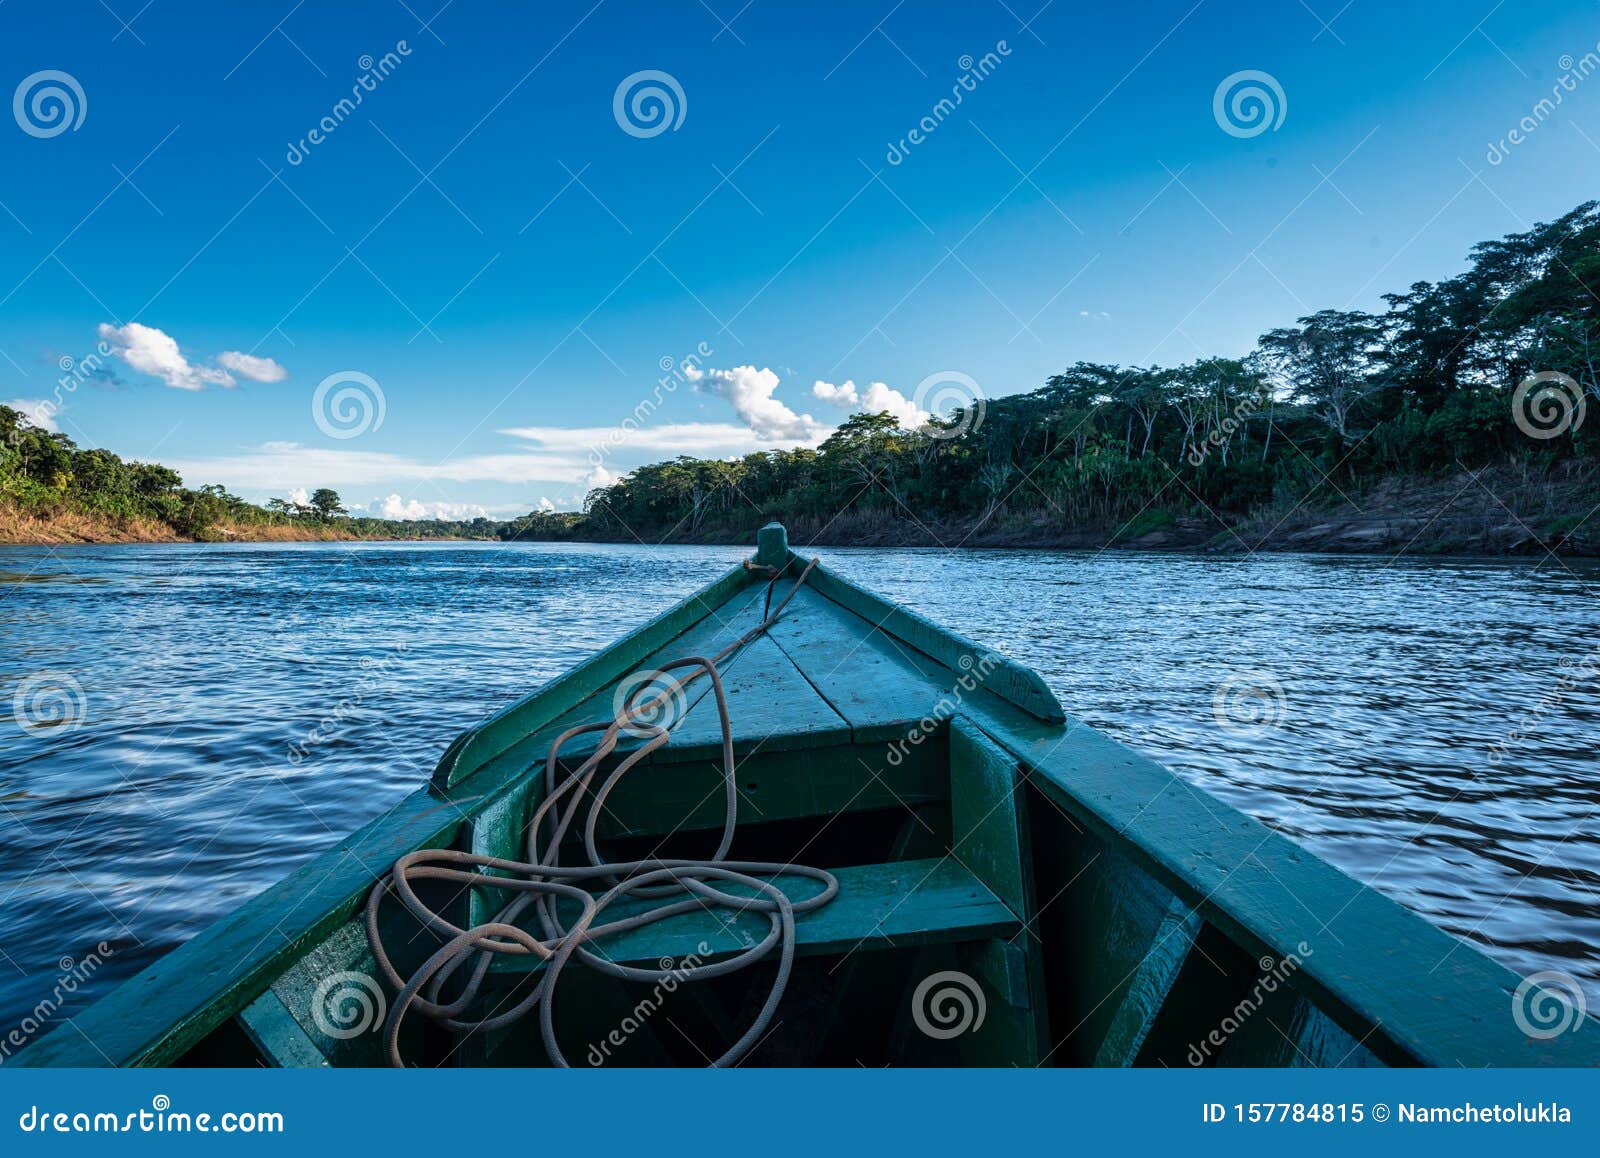 boat on rio madre de dios